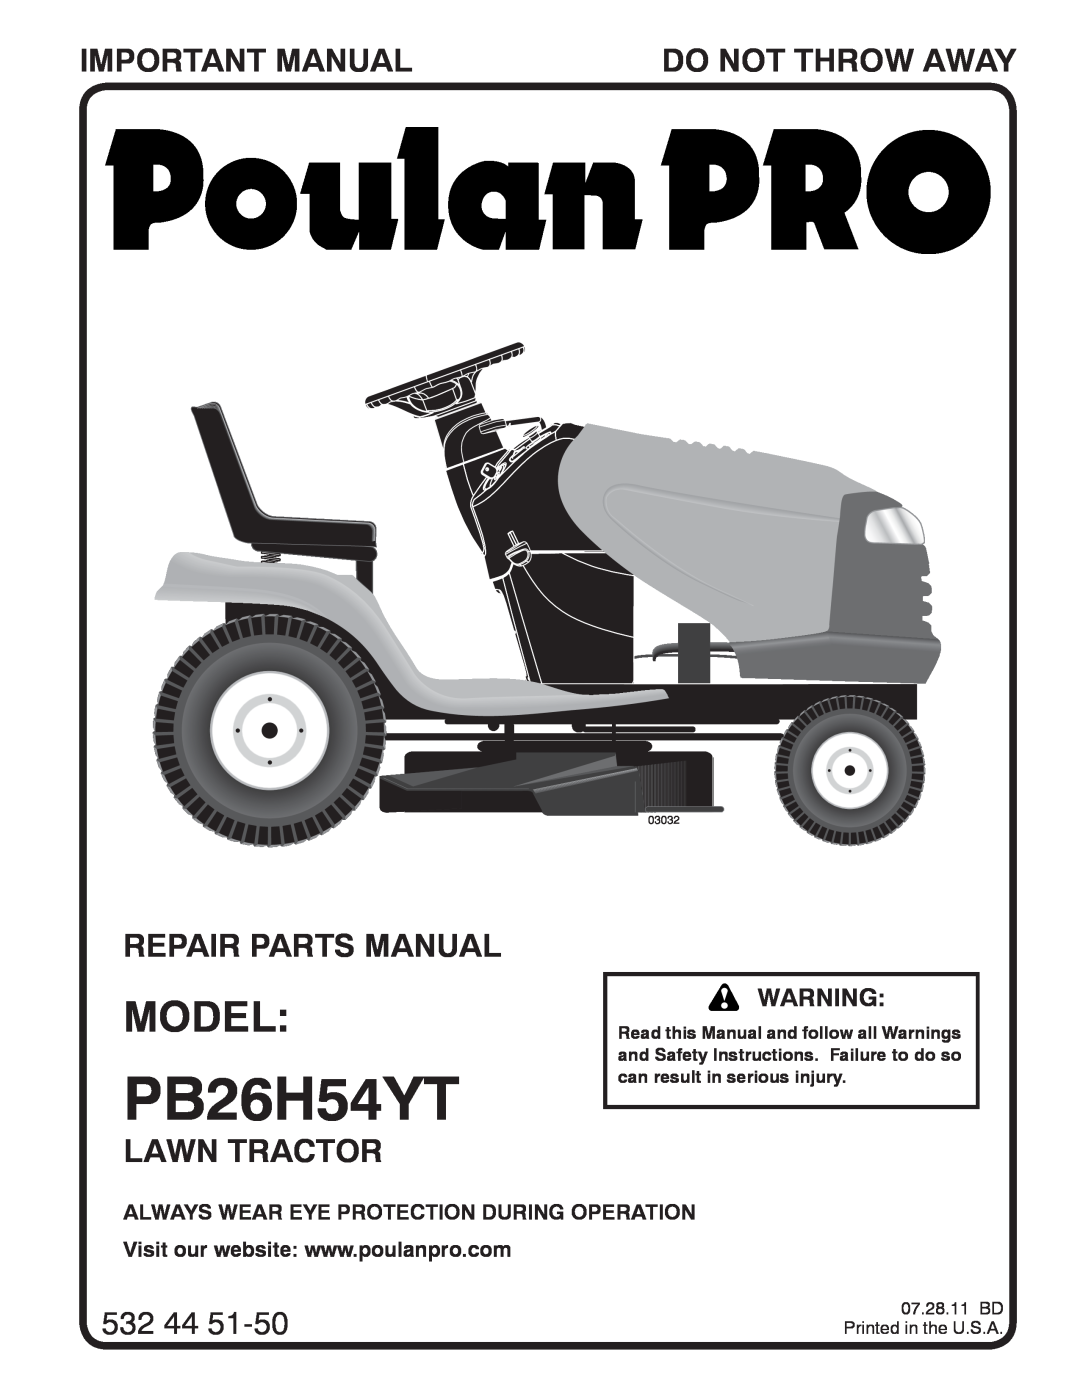 Poulan PB26H5YT manual Model, Important Manual, Do Not Throw Away, Repair Parts Manual, Lawn Tractor, PB26H54YT, 532 